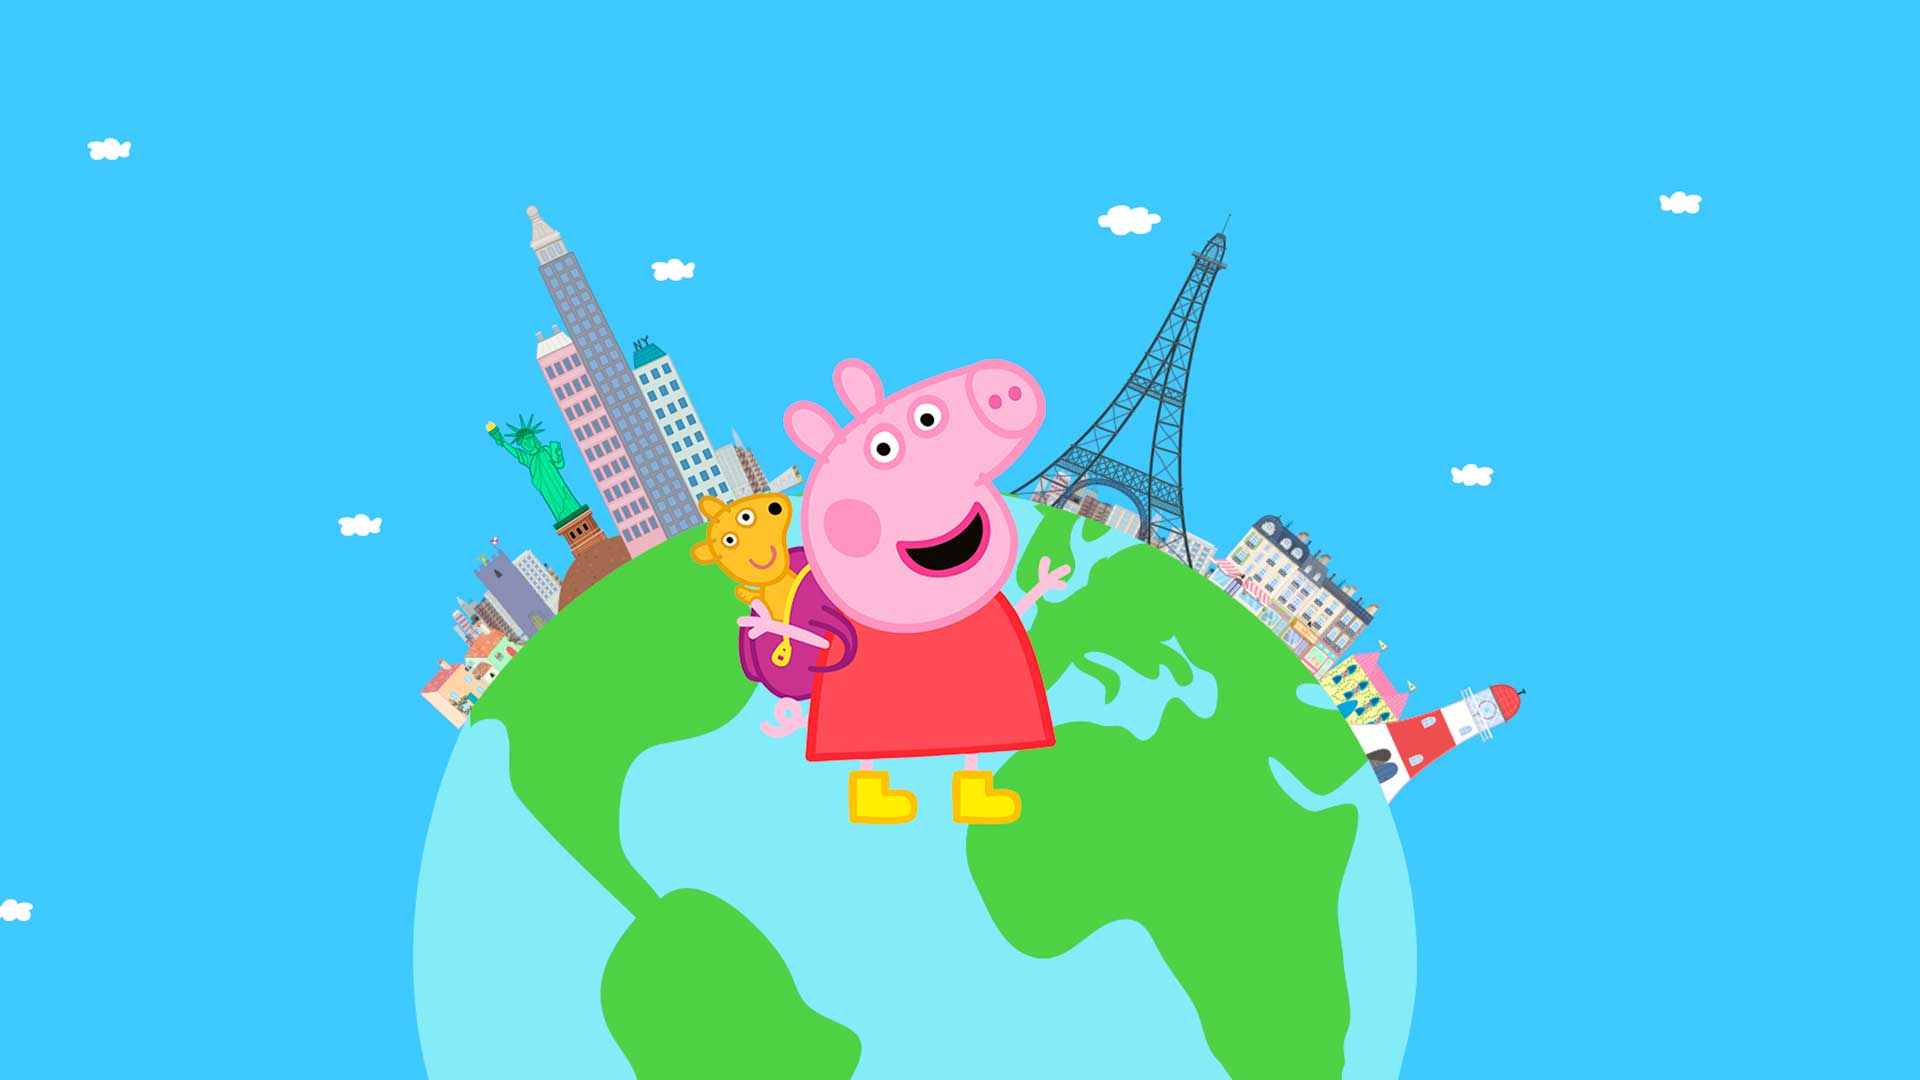 Peppa Pig's latest adventure begins as Peppa Pig: World Adventures